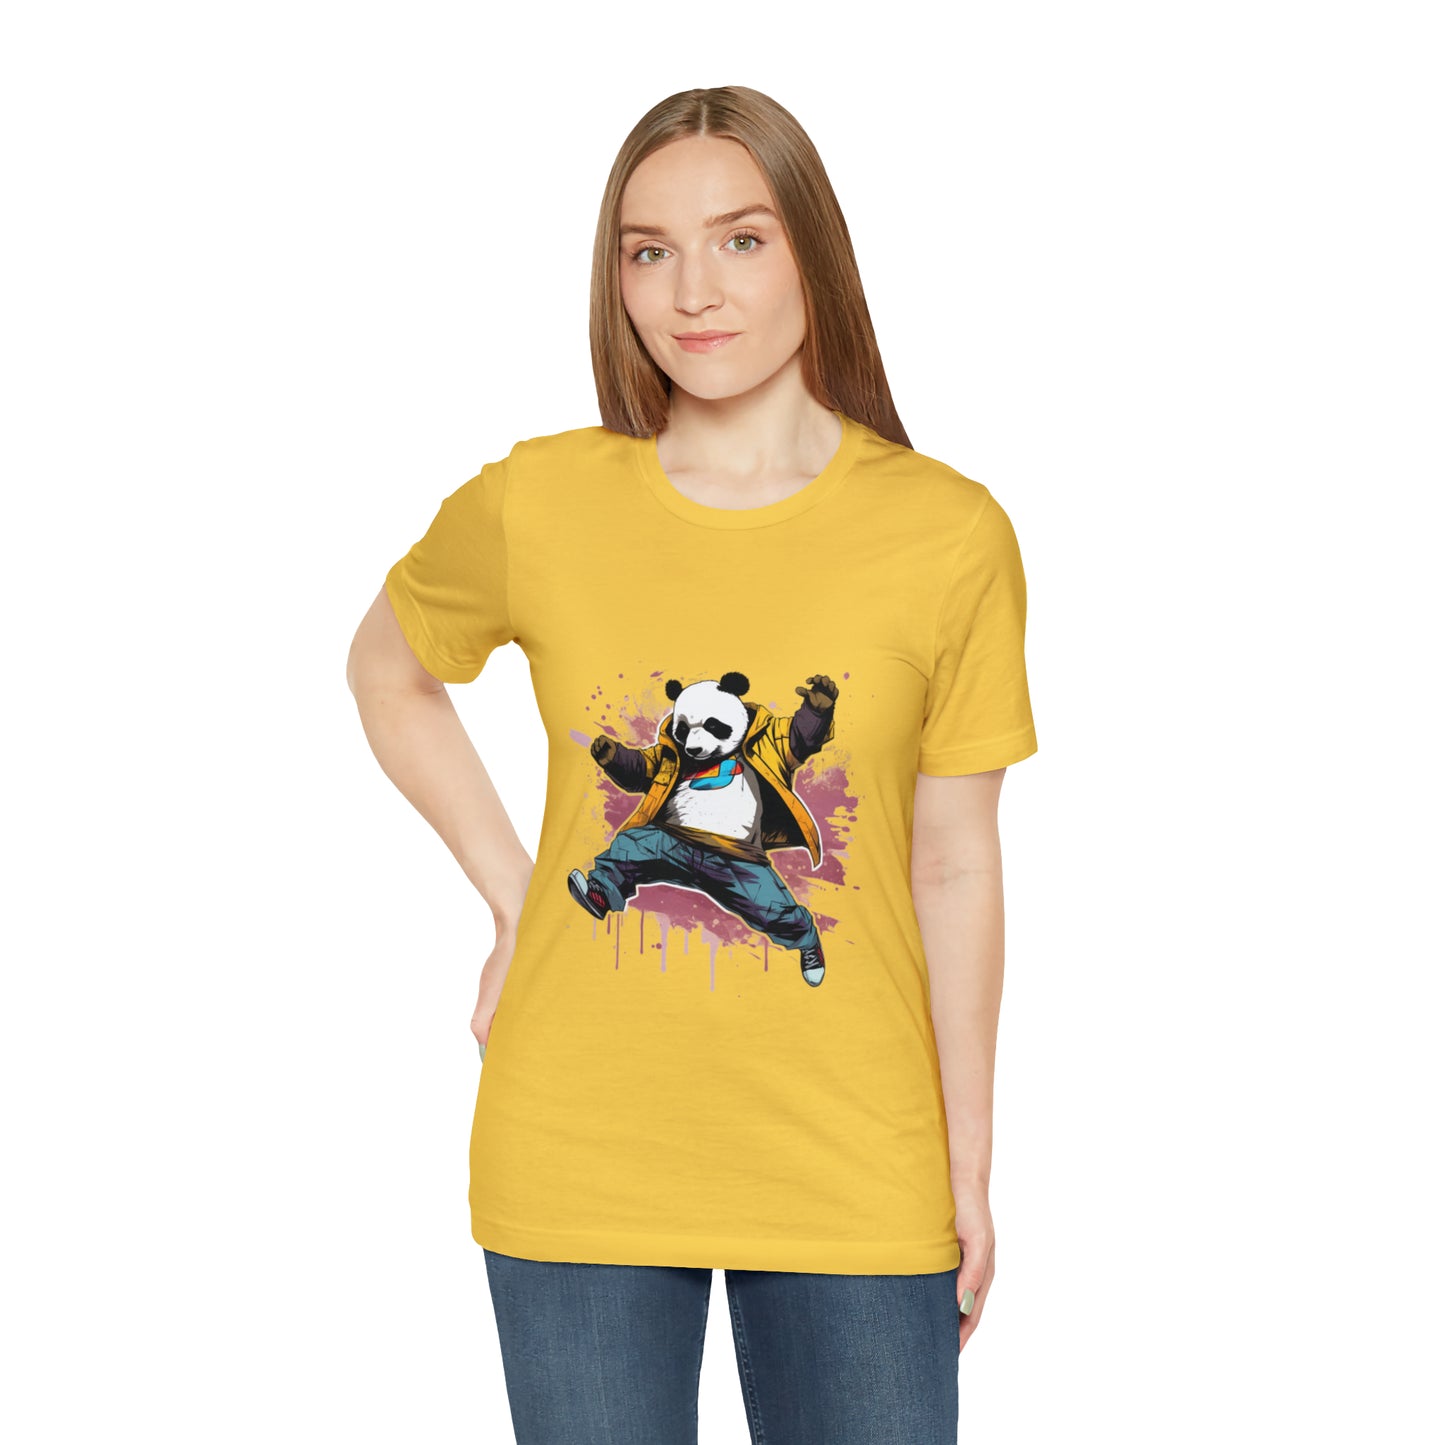 Panda Breakdance Tee